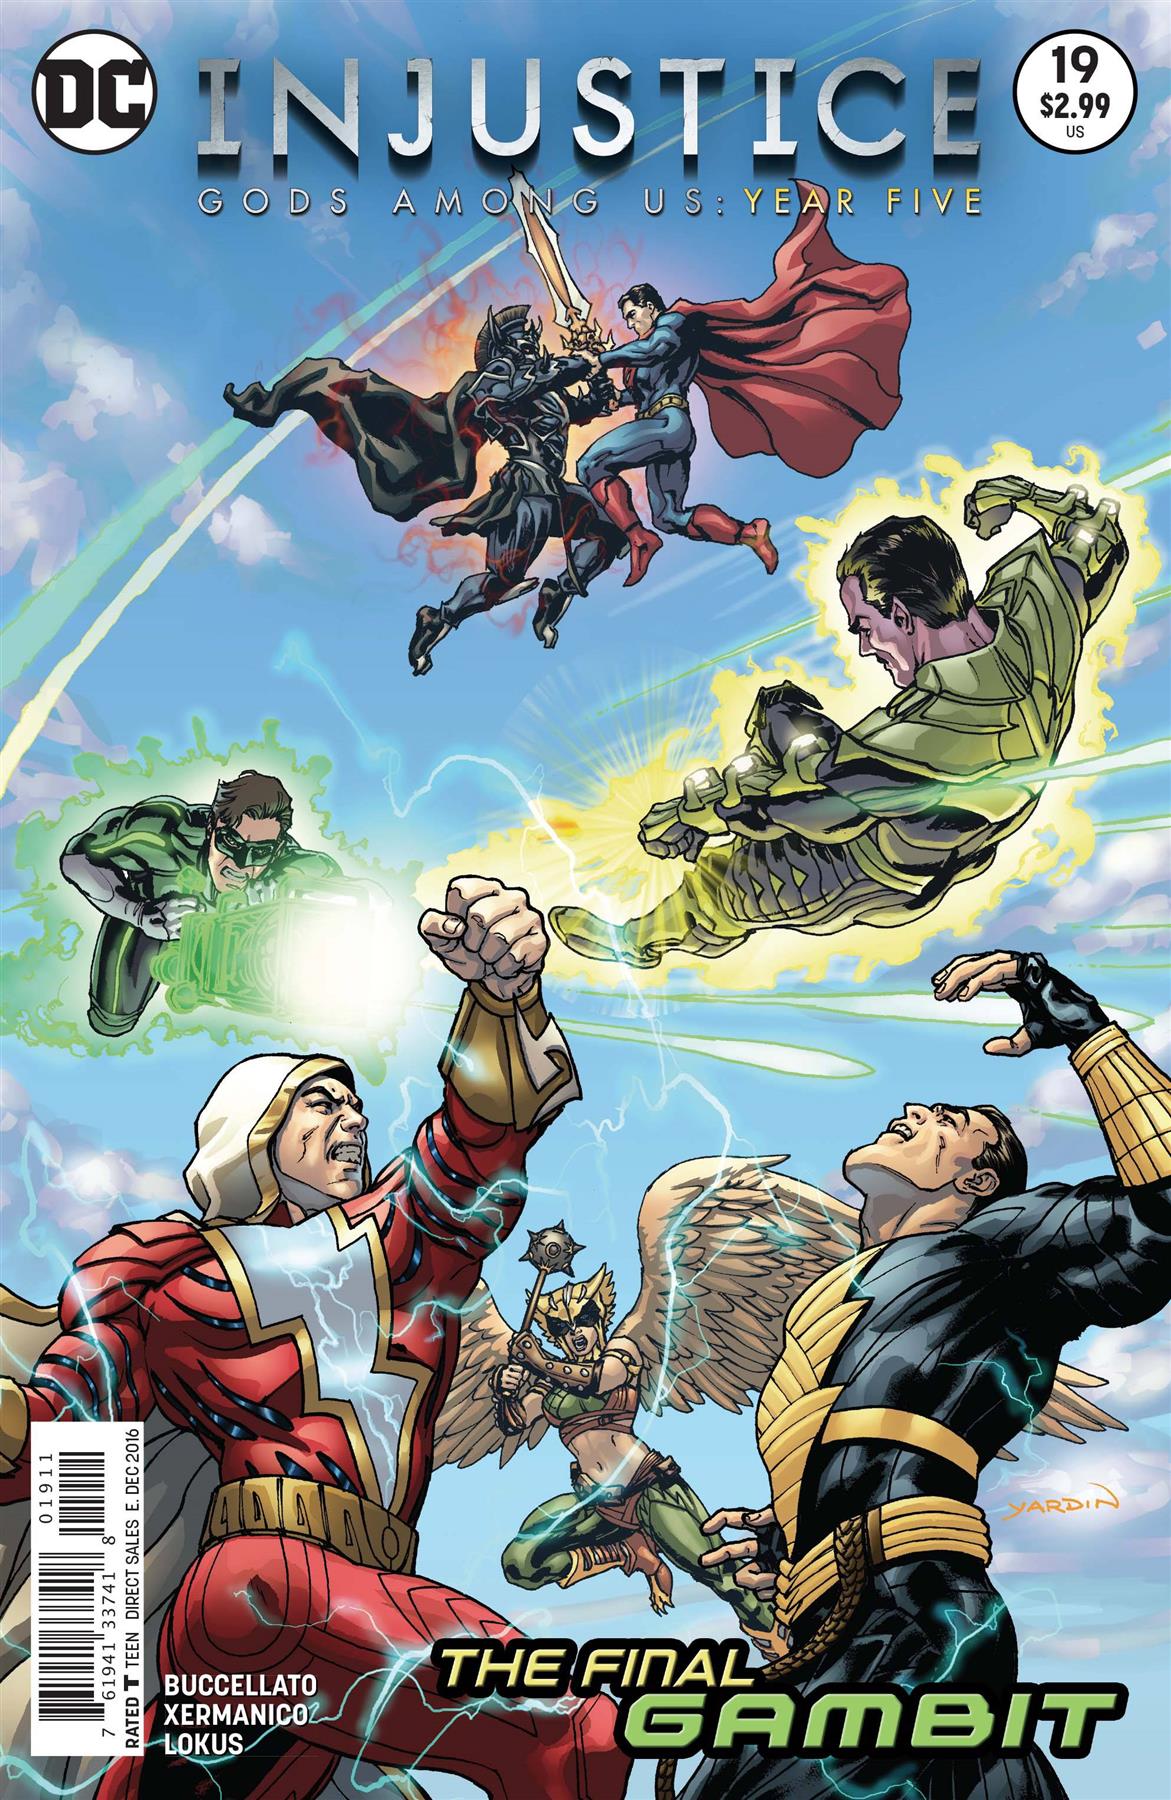 Injustice Gods Among Us Year Five #19 () DC Comics Comic Book